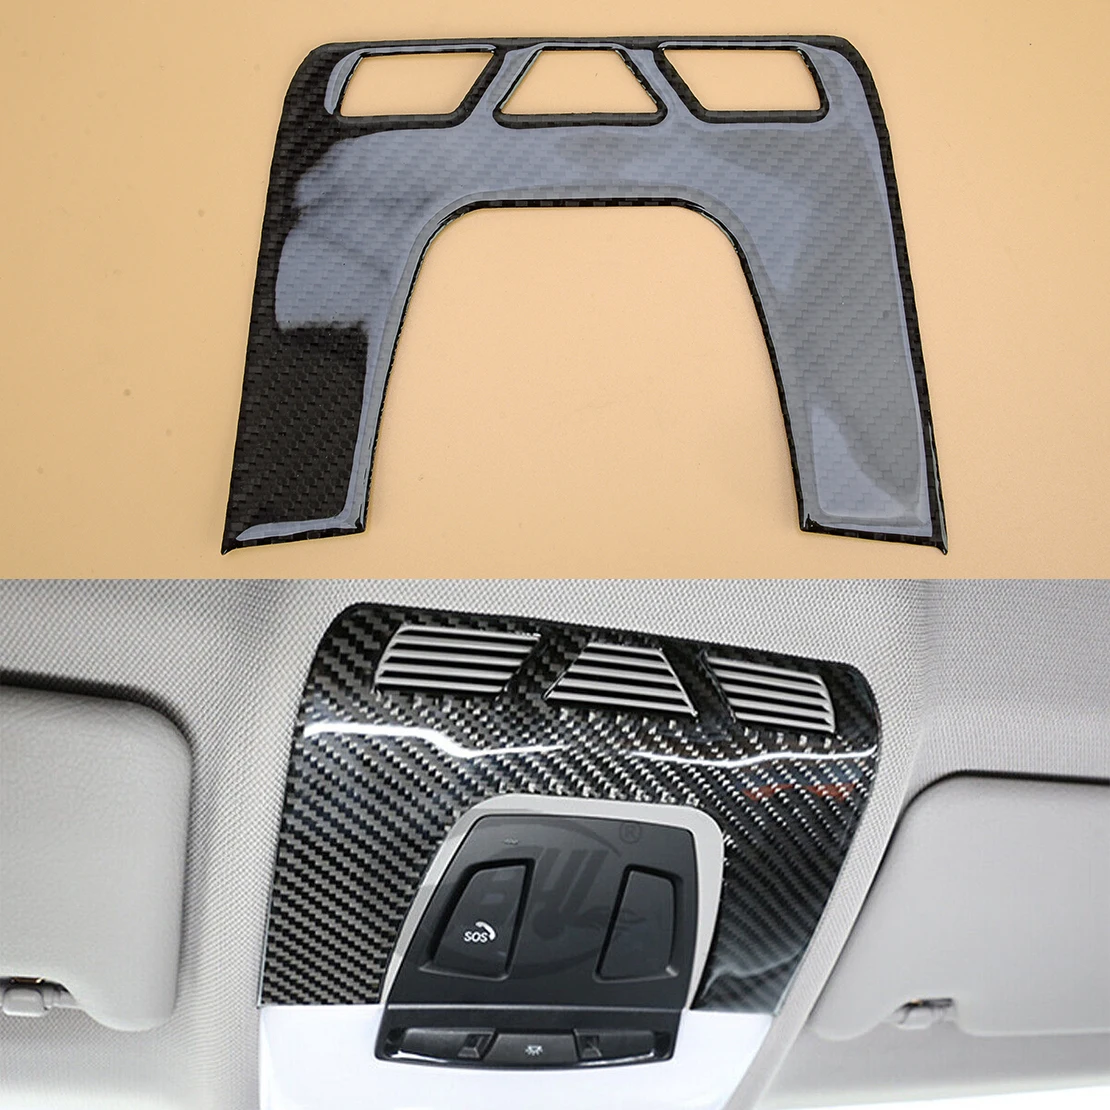 Carbon Fiber Black Car Interior Roof Reading Lamp Light Panel Cover Trim Sticker Fit for BMW 1 2 3 Series X1 X2 X5 X6 2018